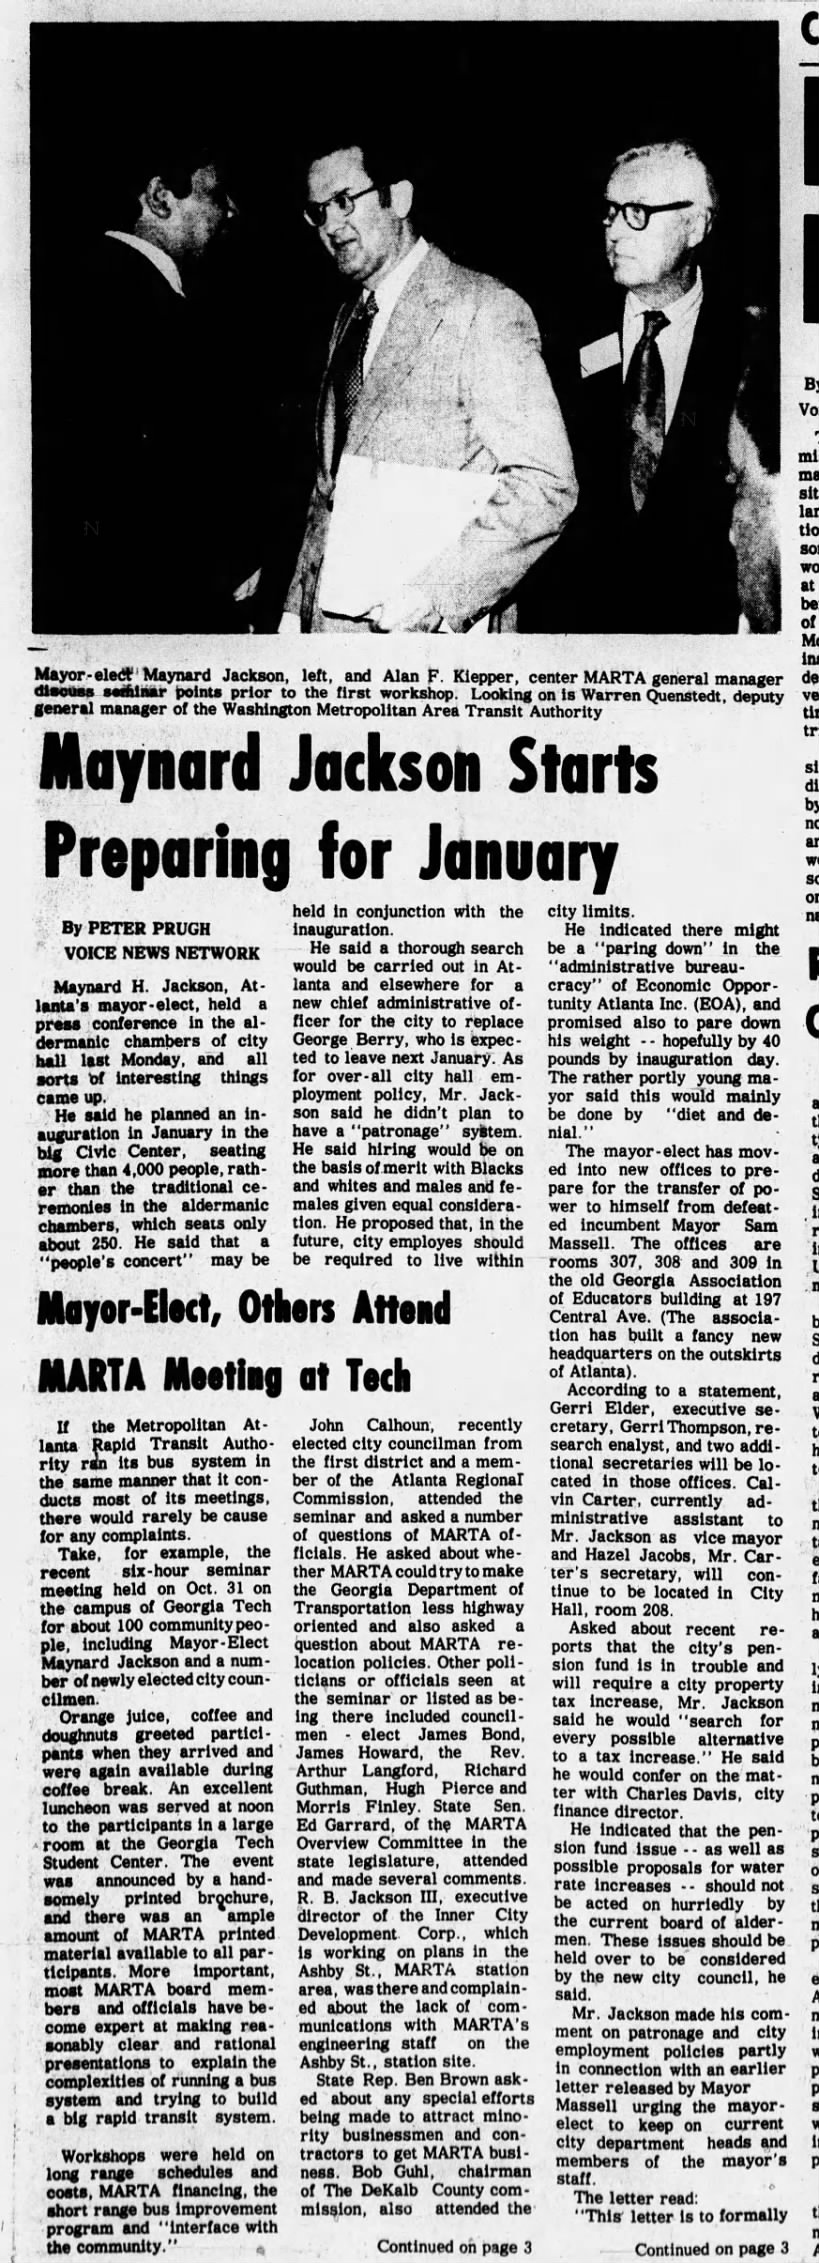 Maynard Jackson prepares to take office